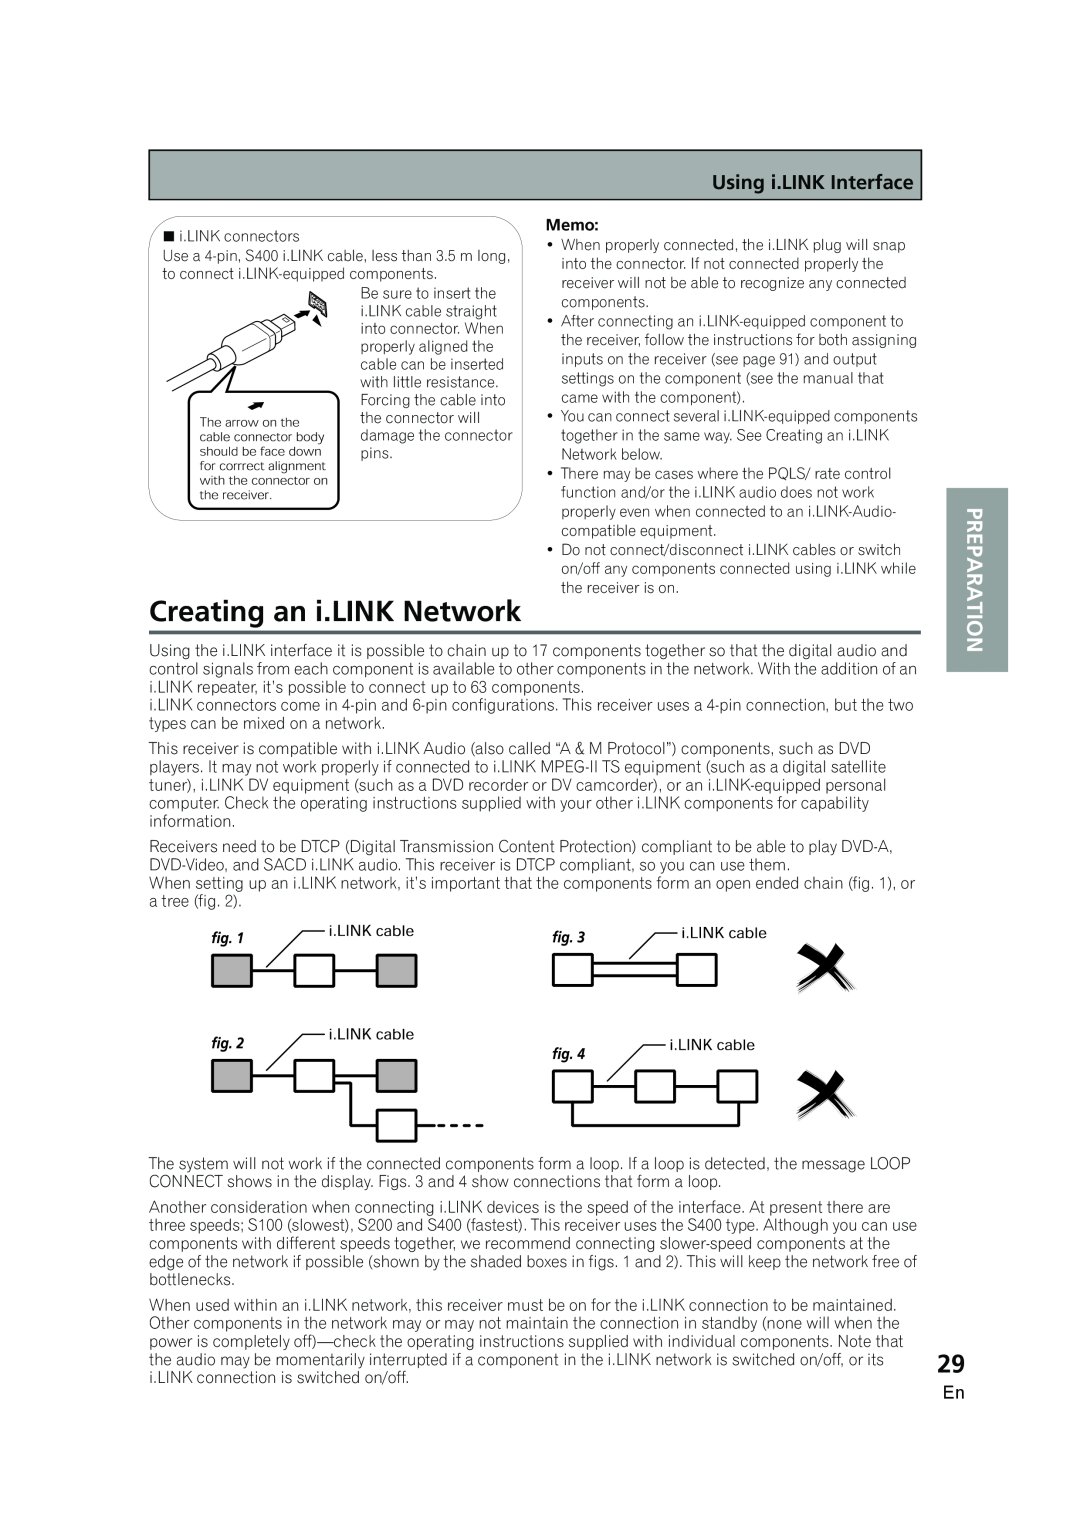 Pioneer VSX-AX5i-G manual Creating an i.LINK Network, Memo 